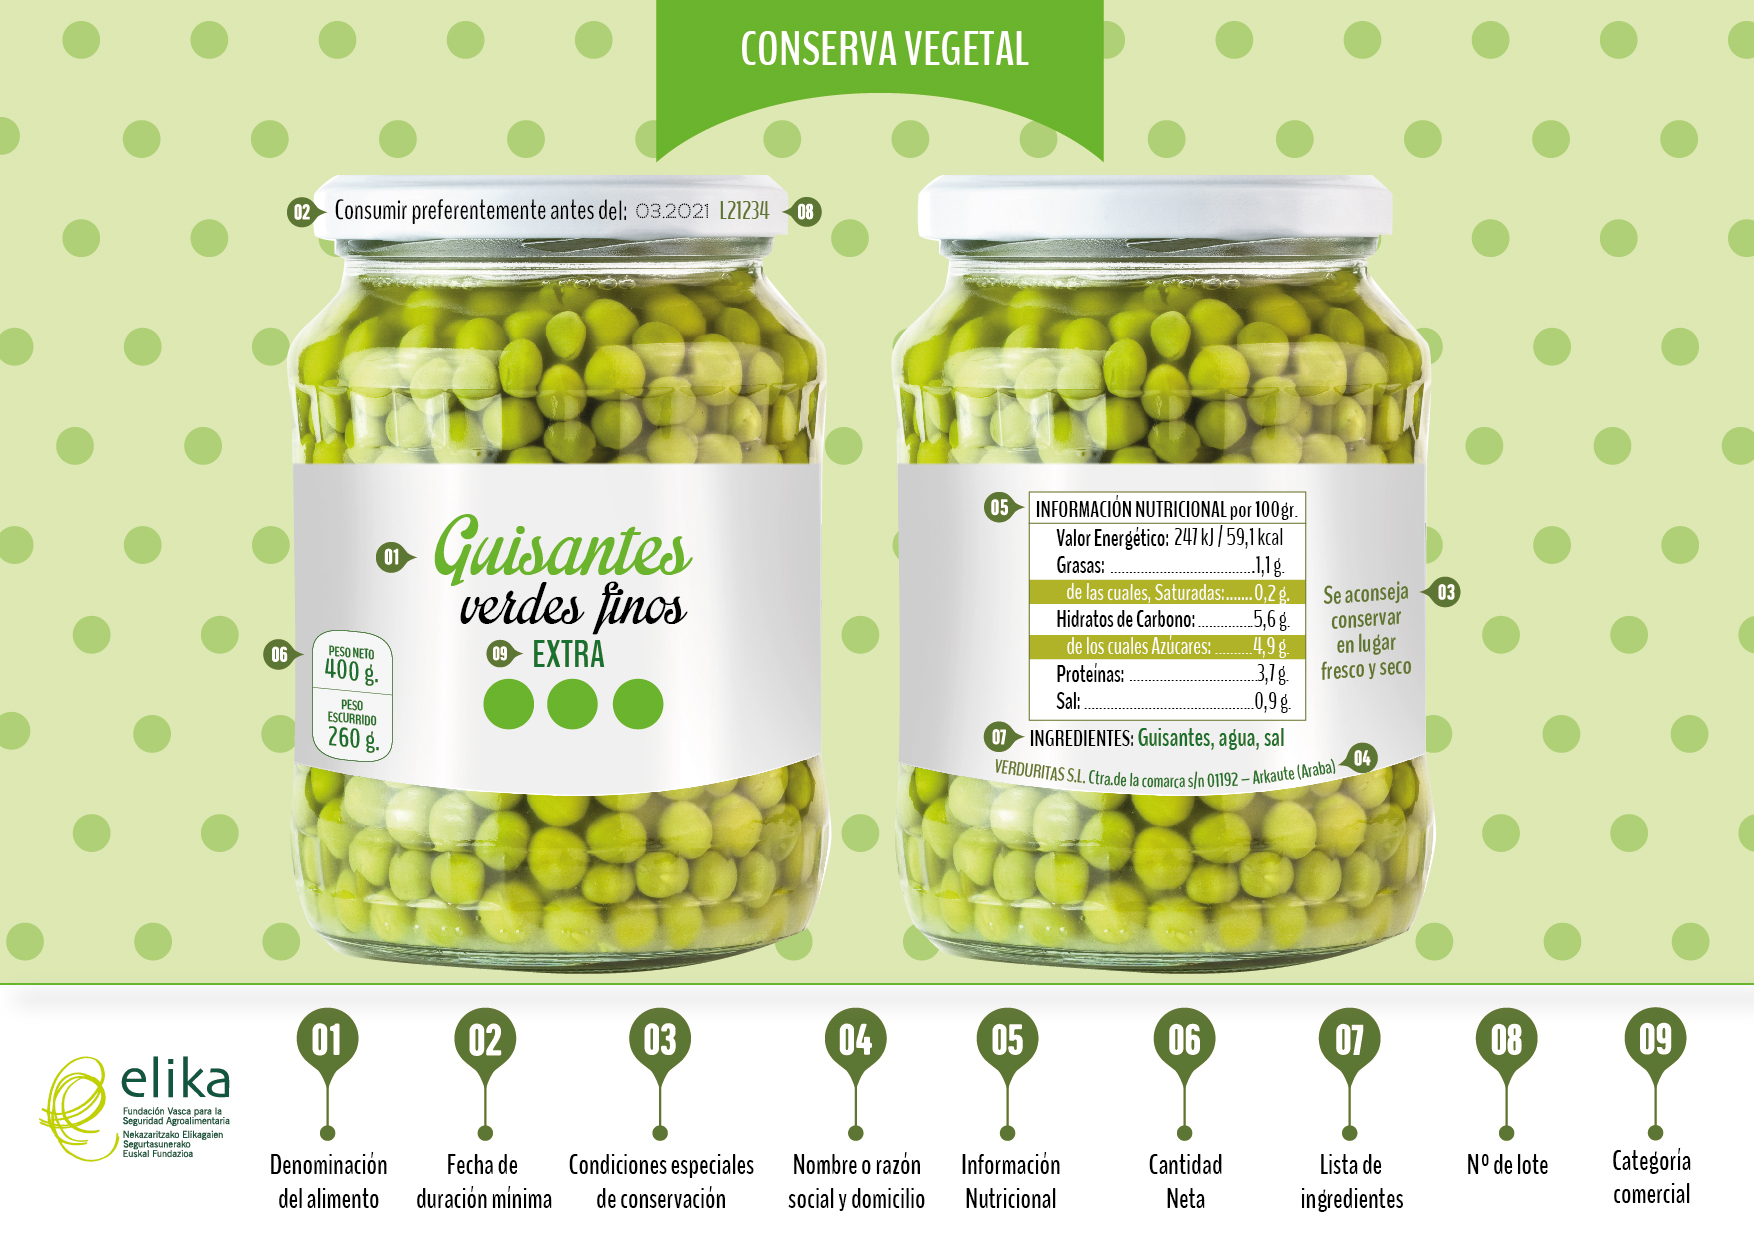 Etiquetado | Conservas vegetales - ELIKA